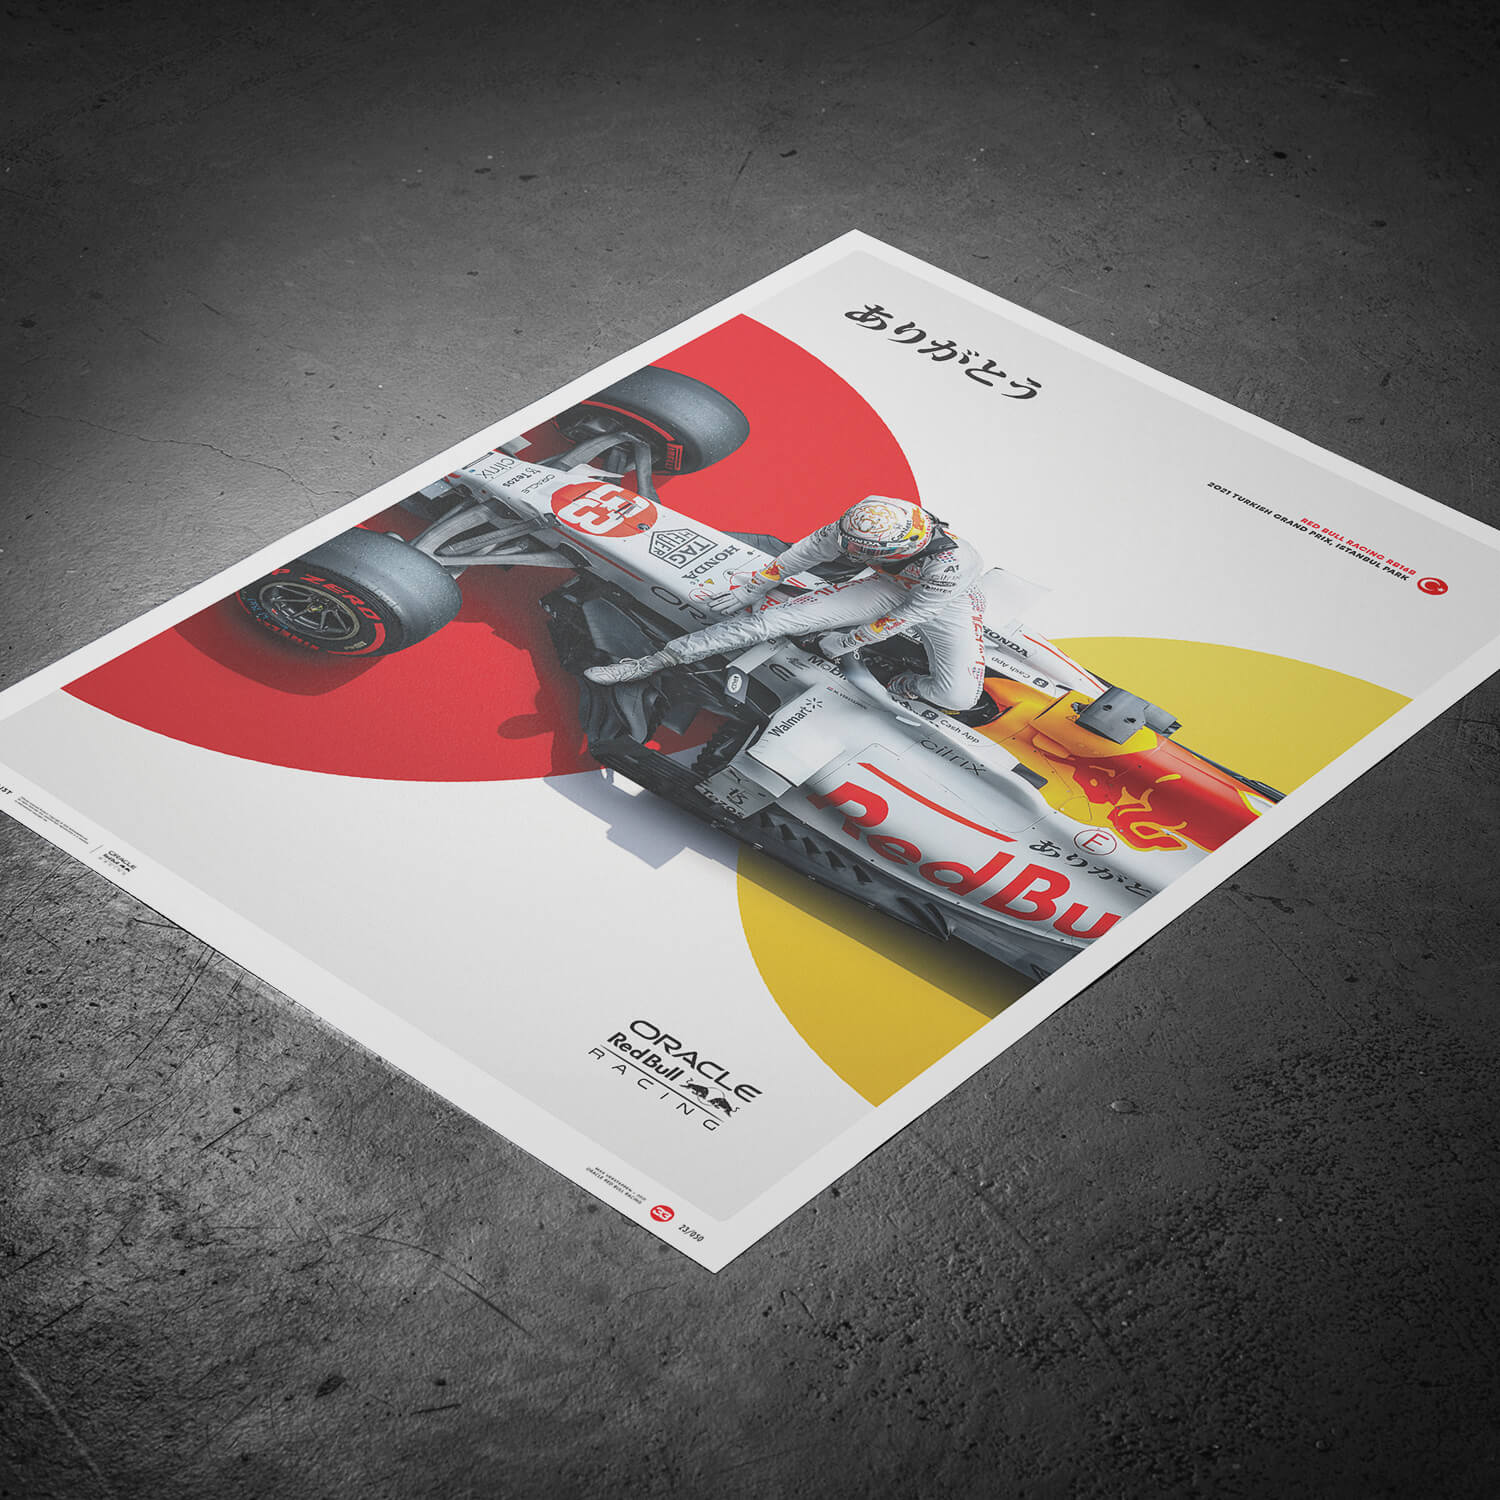 Oracle Red Bull Racing - The White Bull - Honda Livery - Turkish Grand Prix - 2021